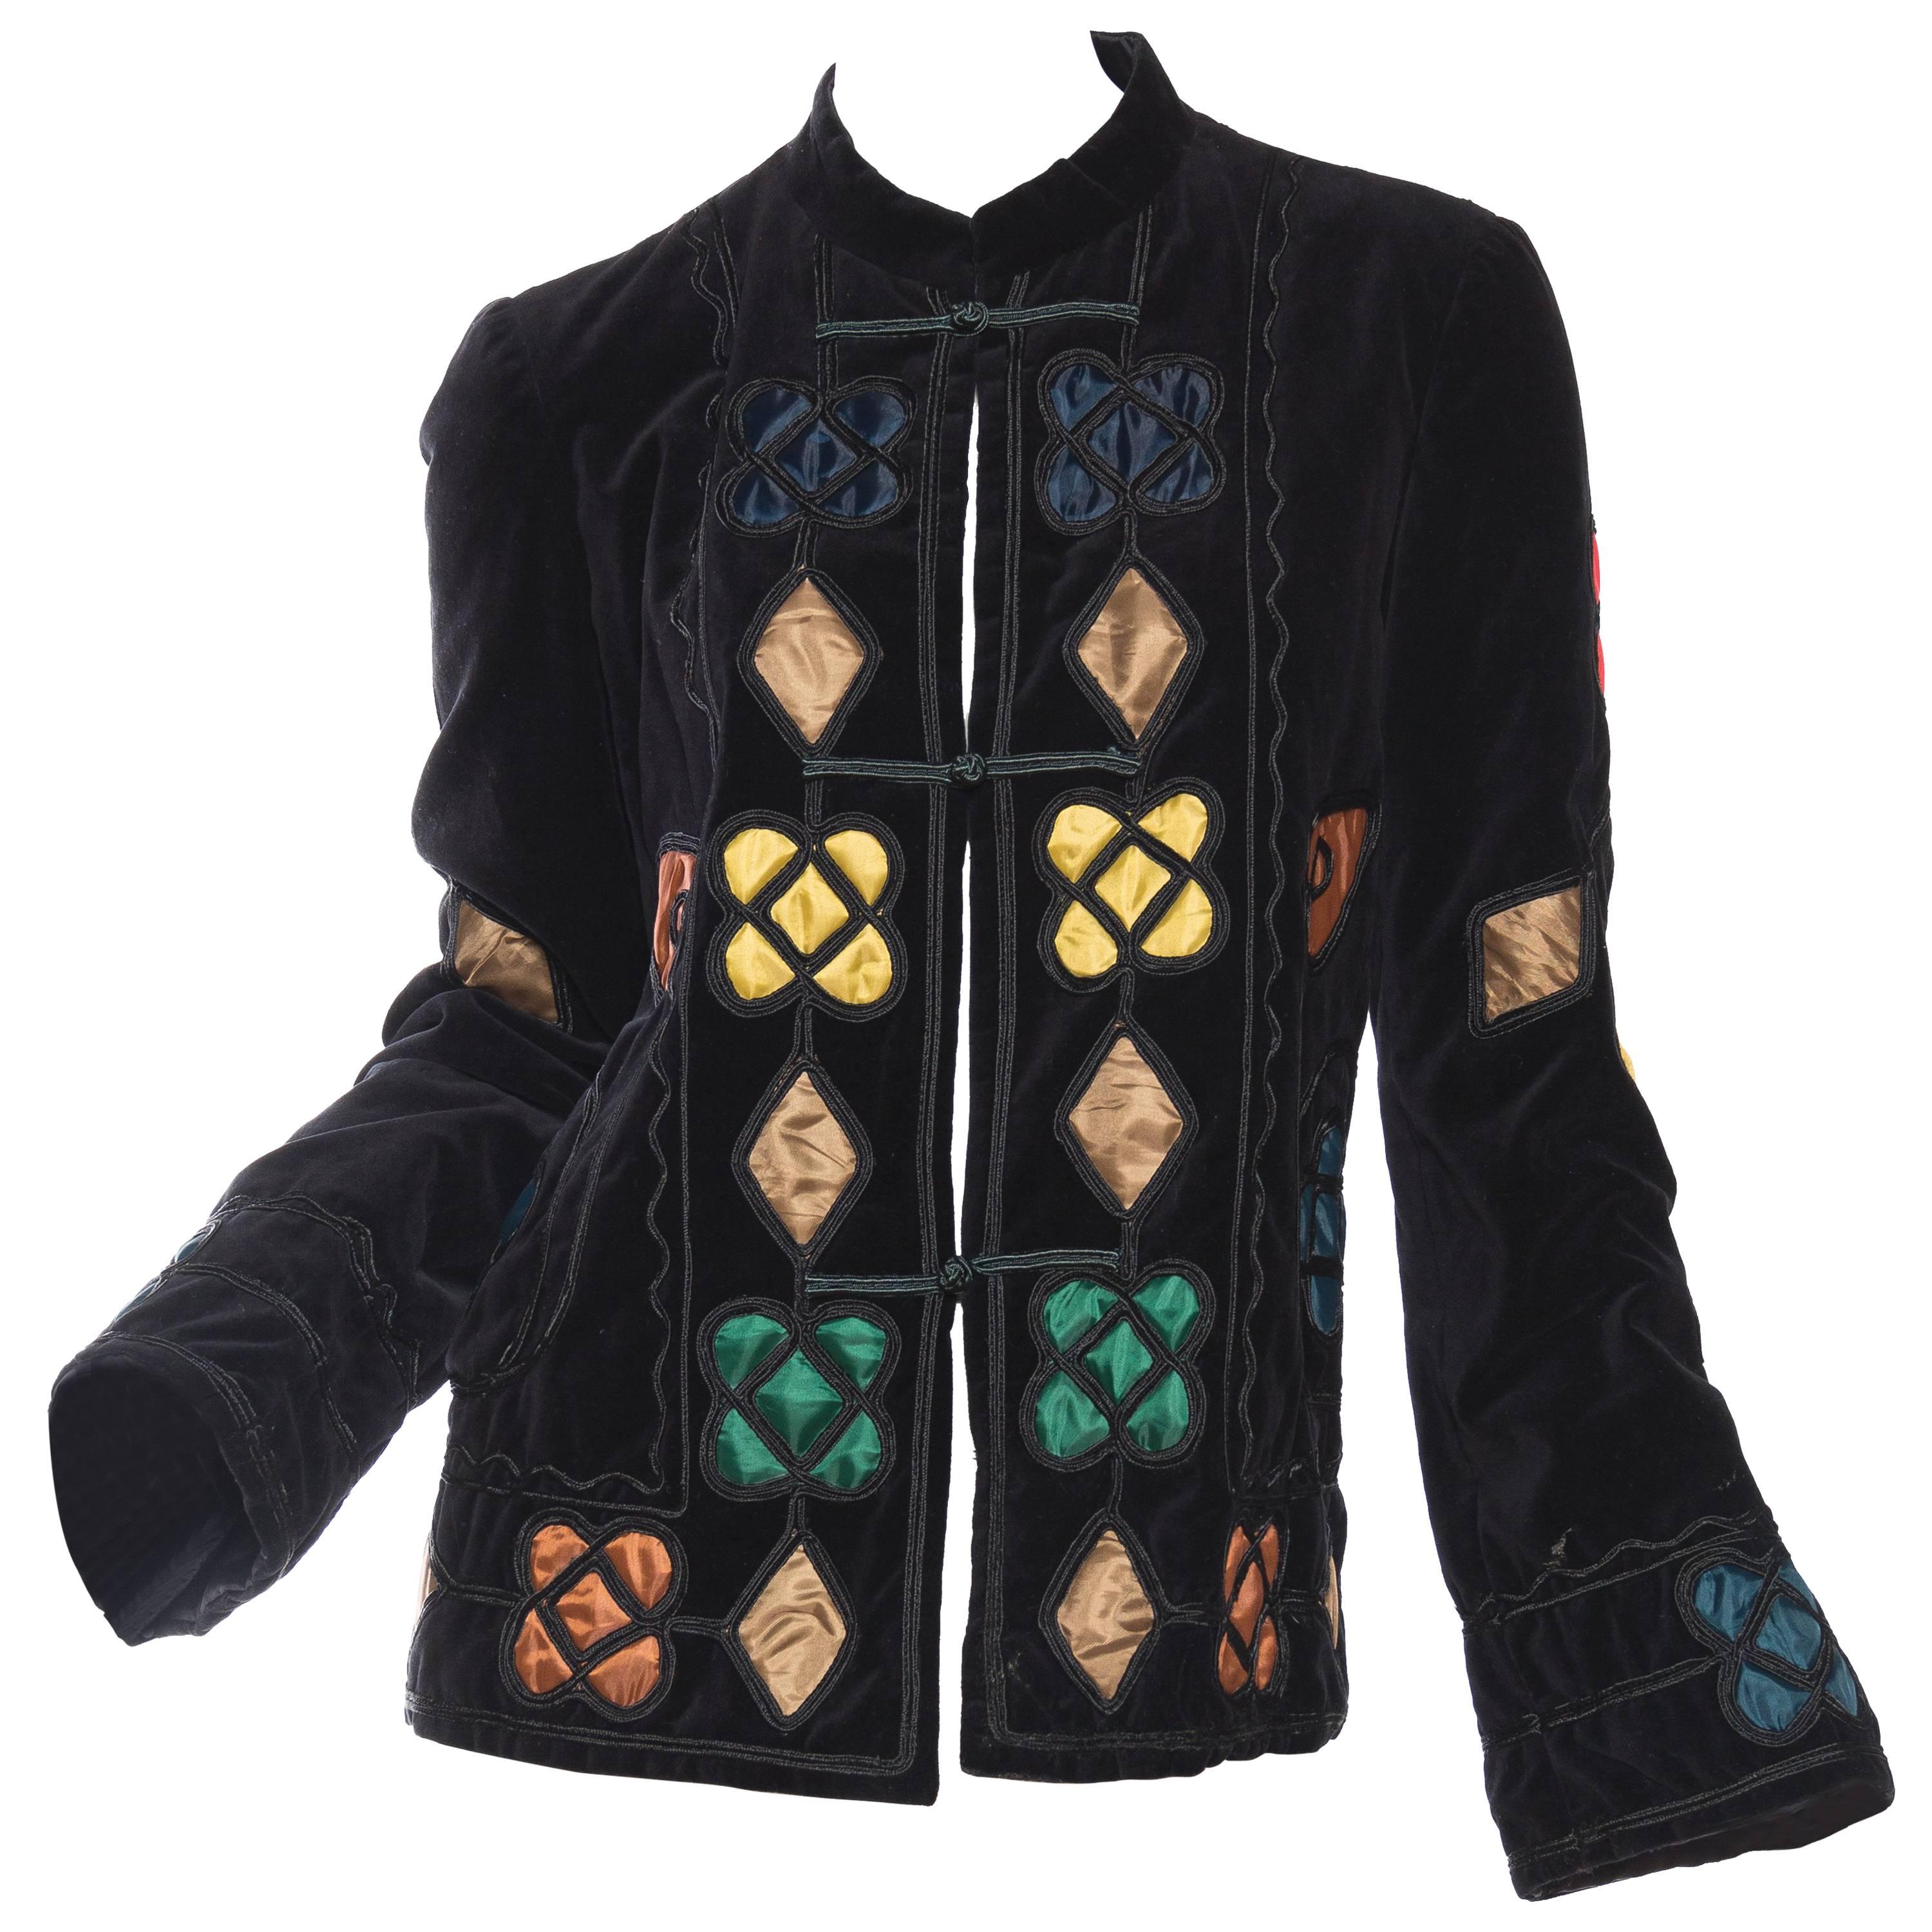 Bohemian Style Velvet Jacket by Armani